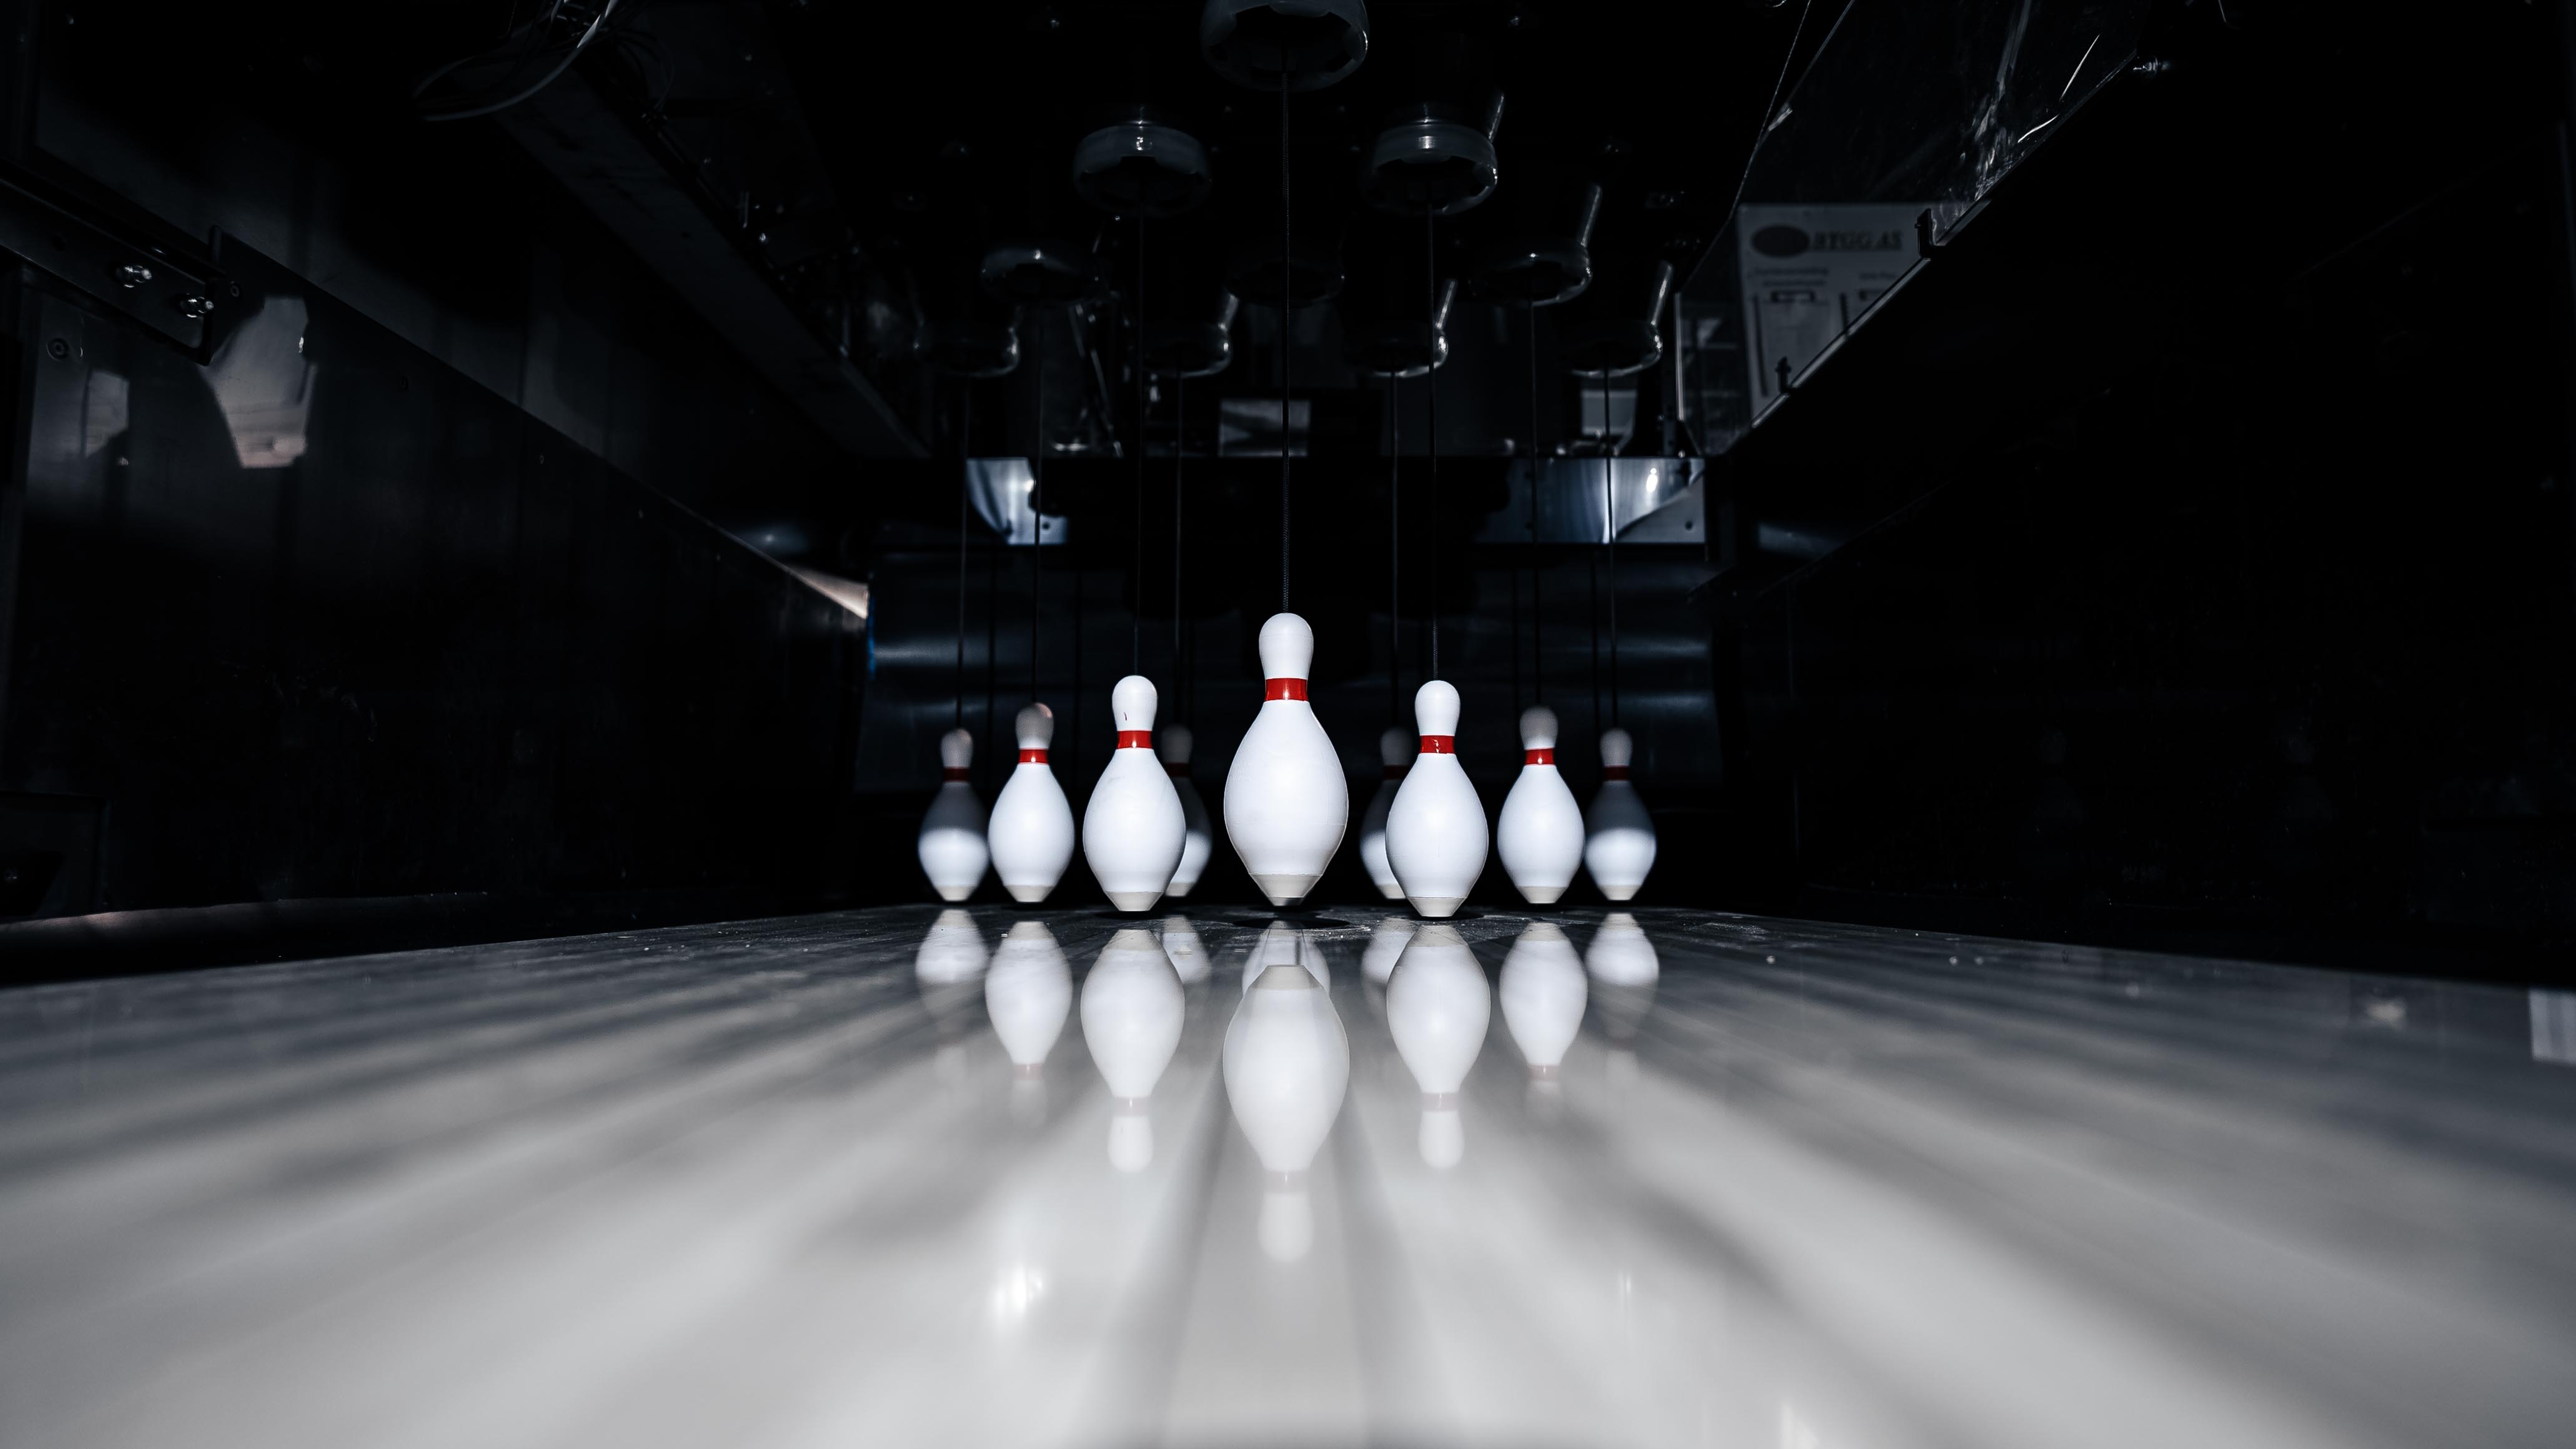 Duckpin - En ny type bowling - midt i Oslo sentrum